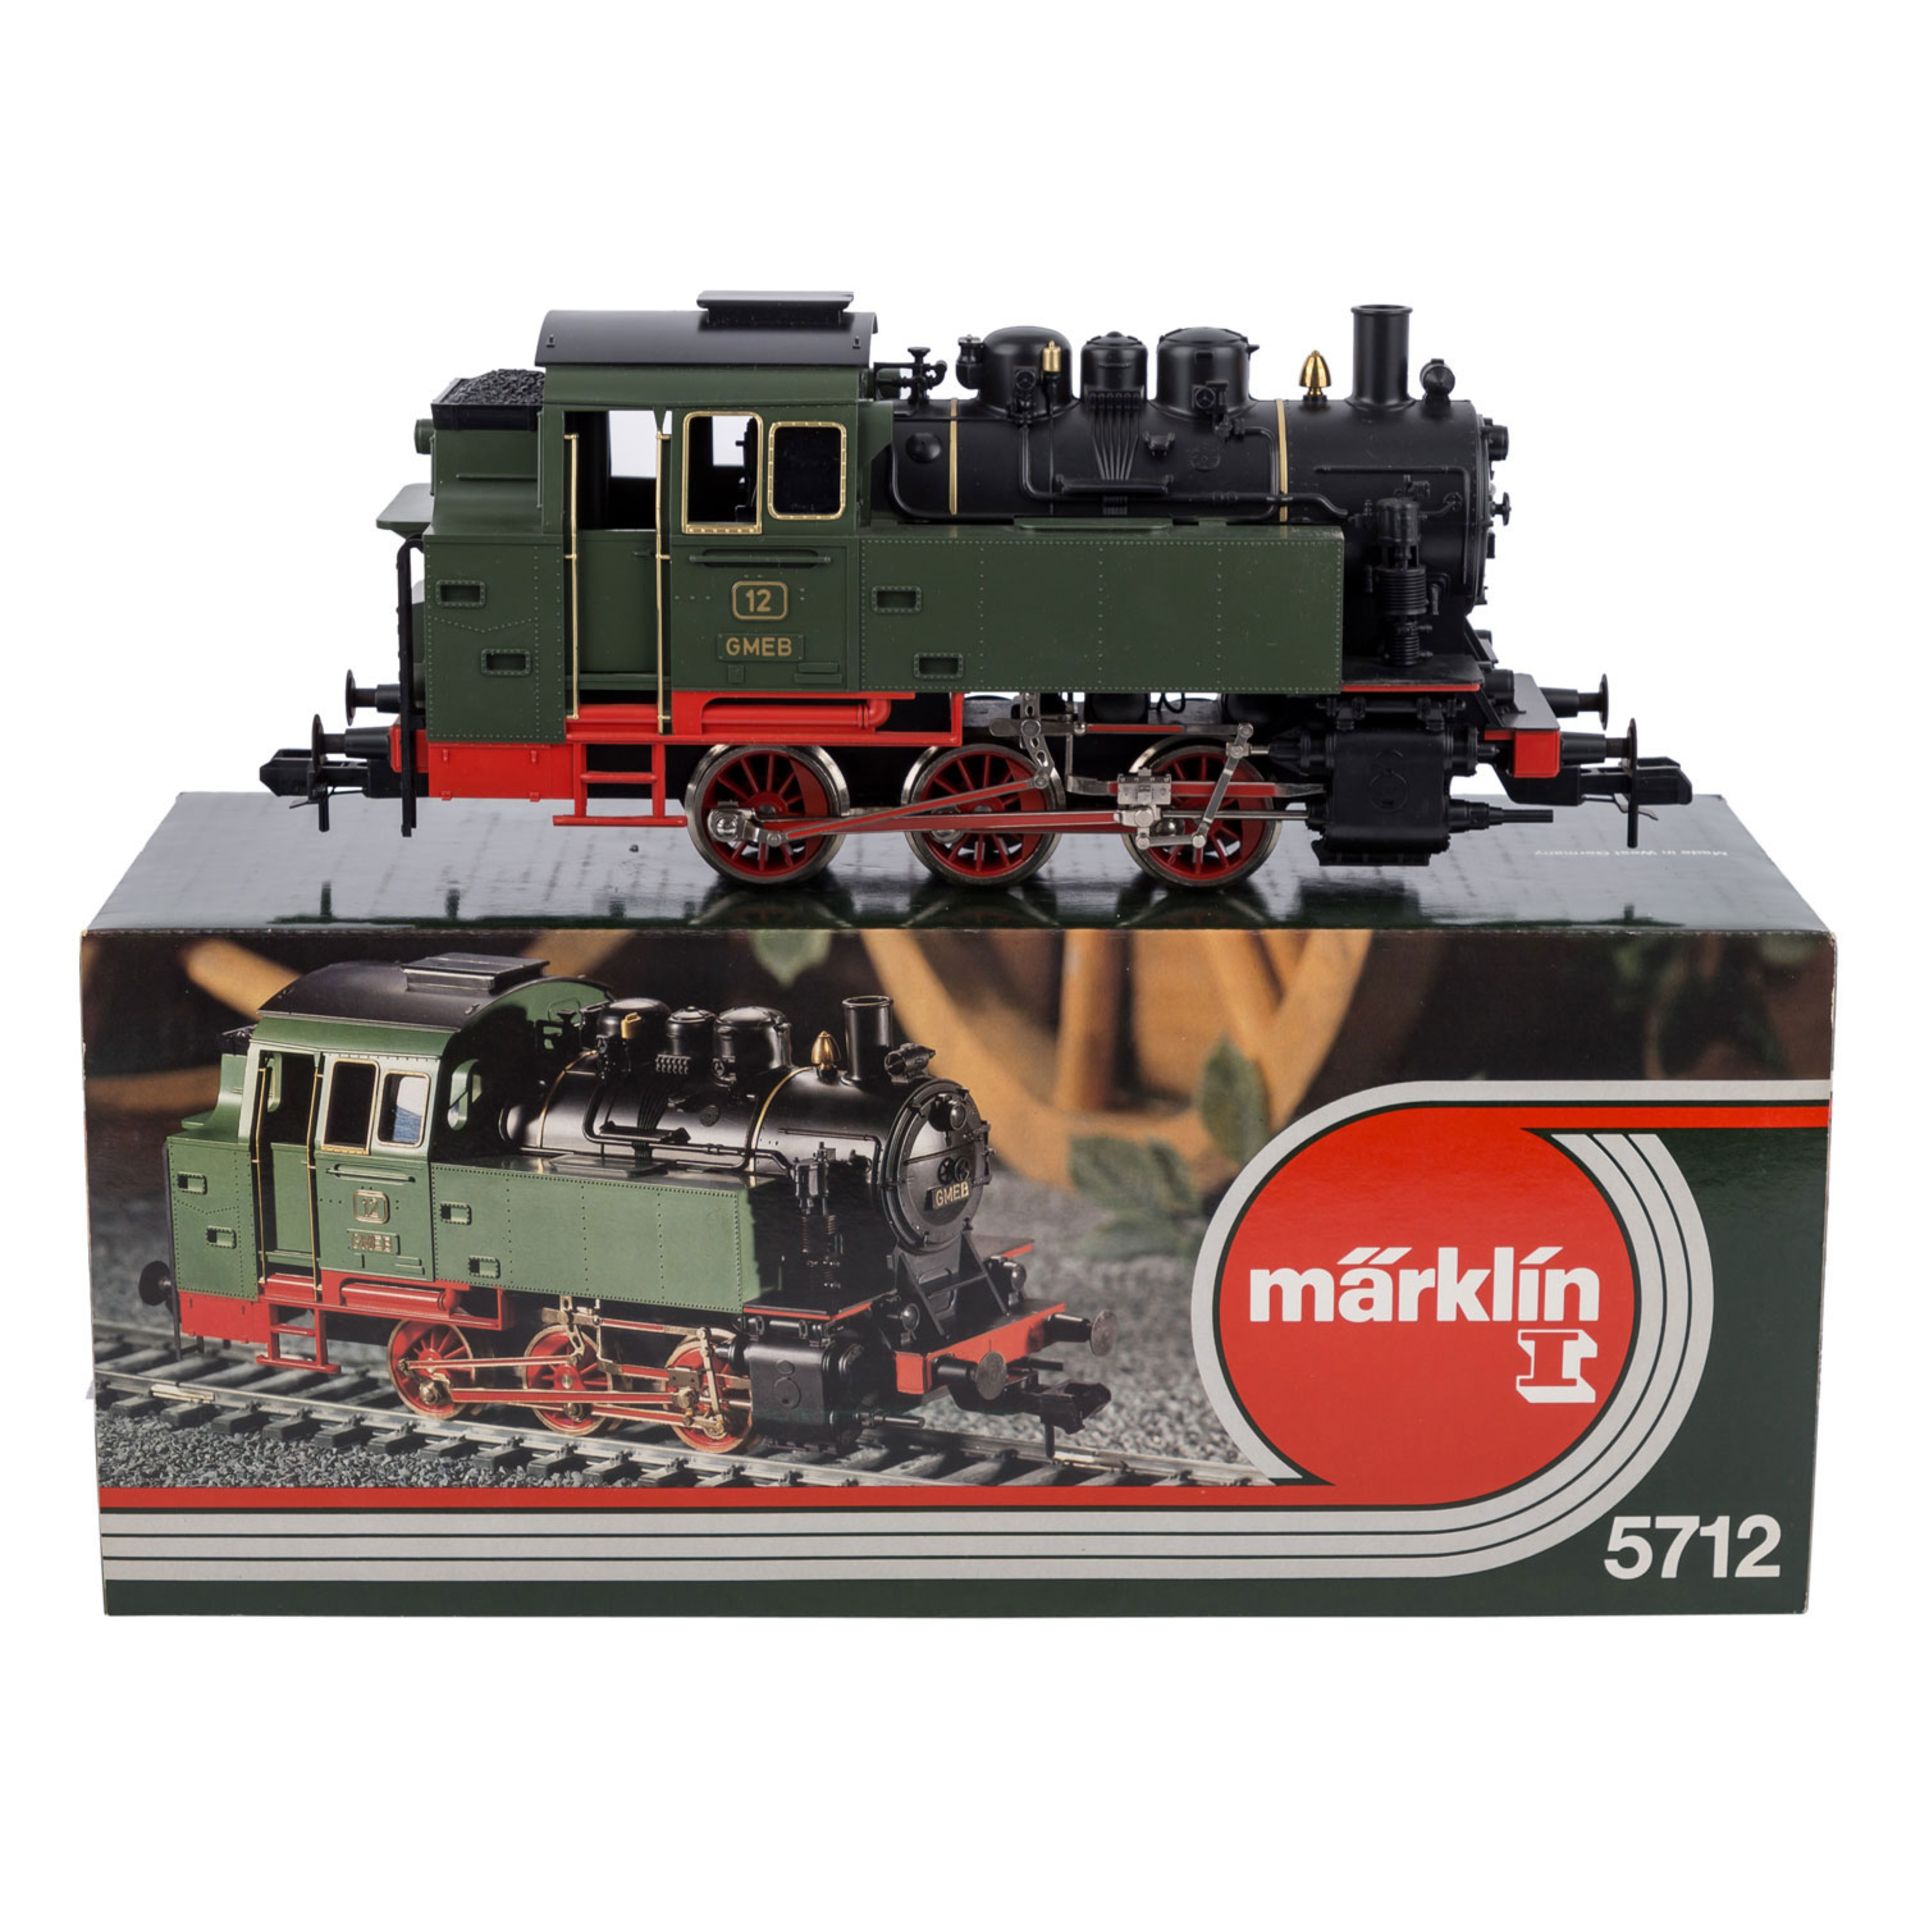 MÄRKLIN Tenderlok der GMEB 5712, Spur 1,schwarz/grün, BN 12. Im Originalkarton (l.